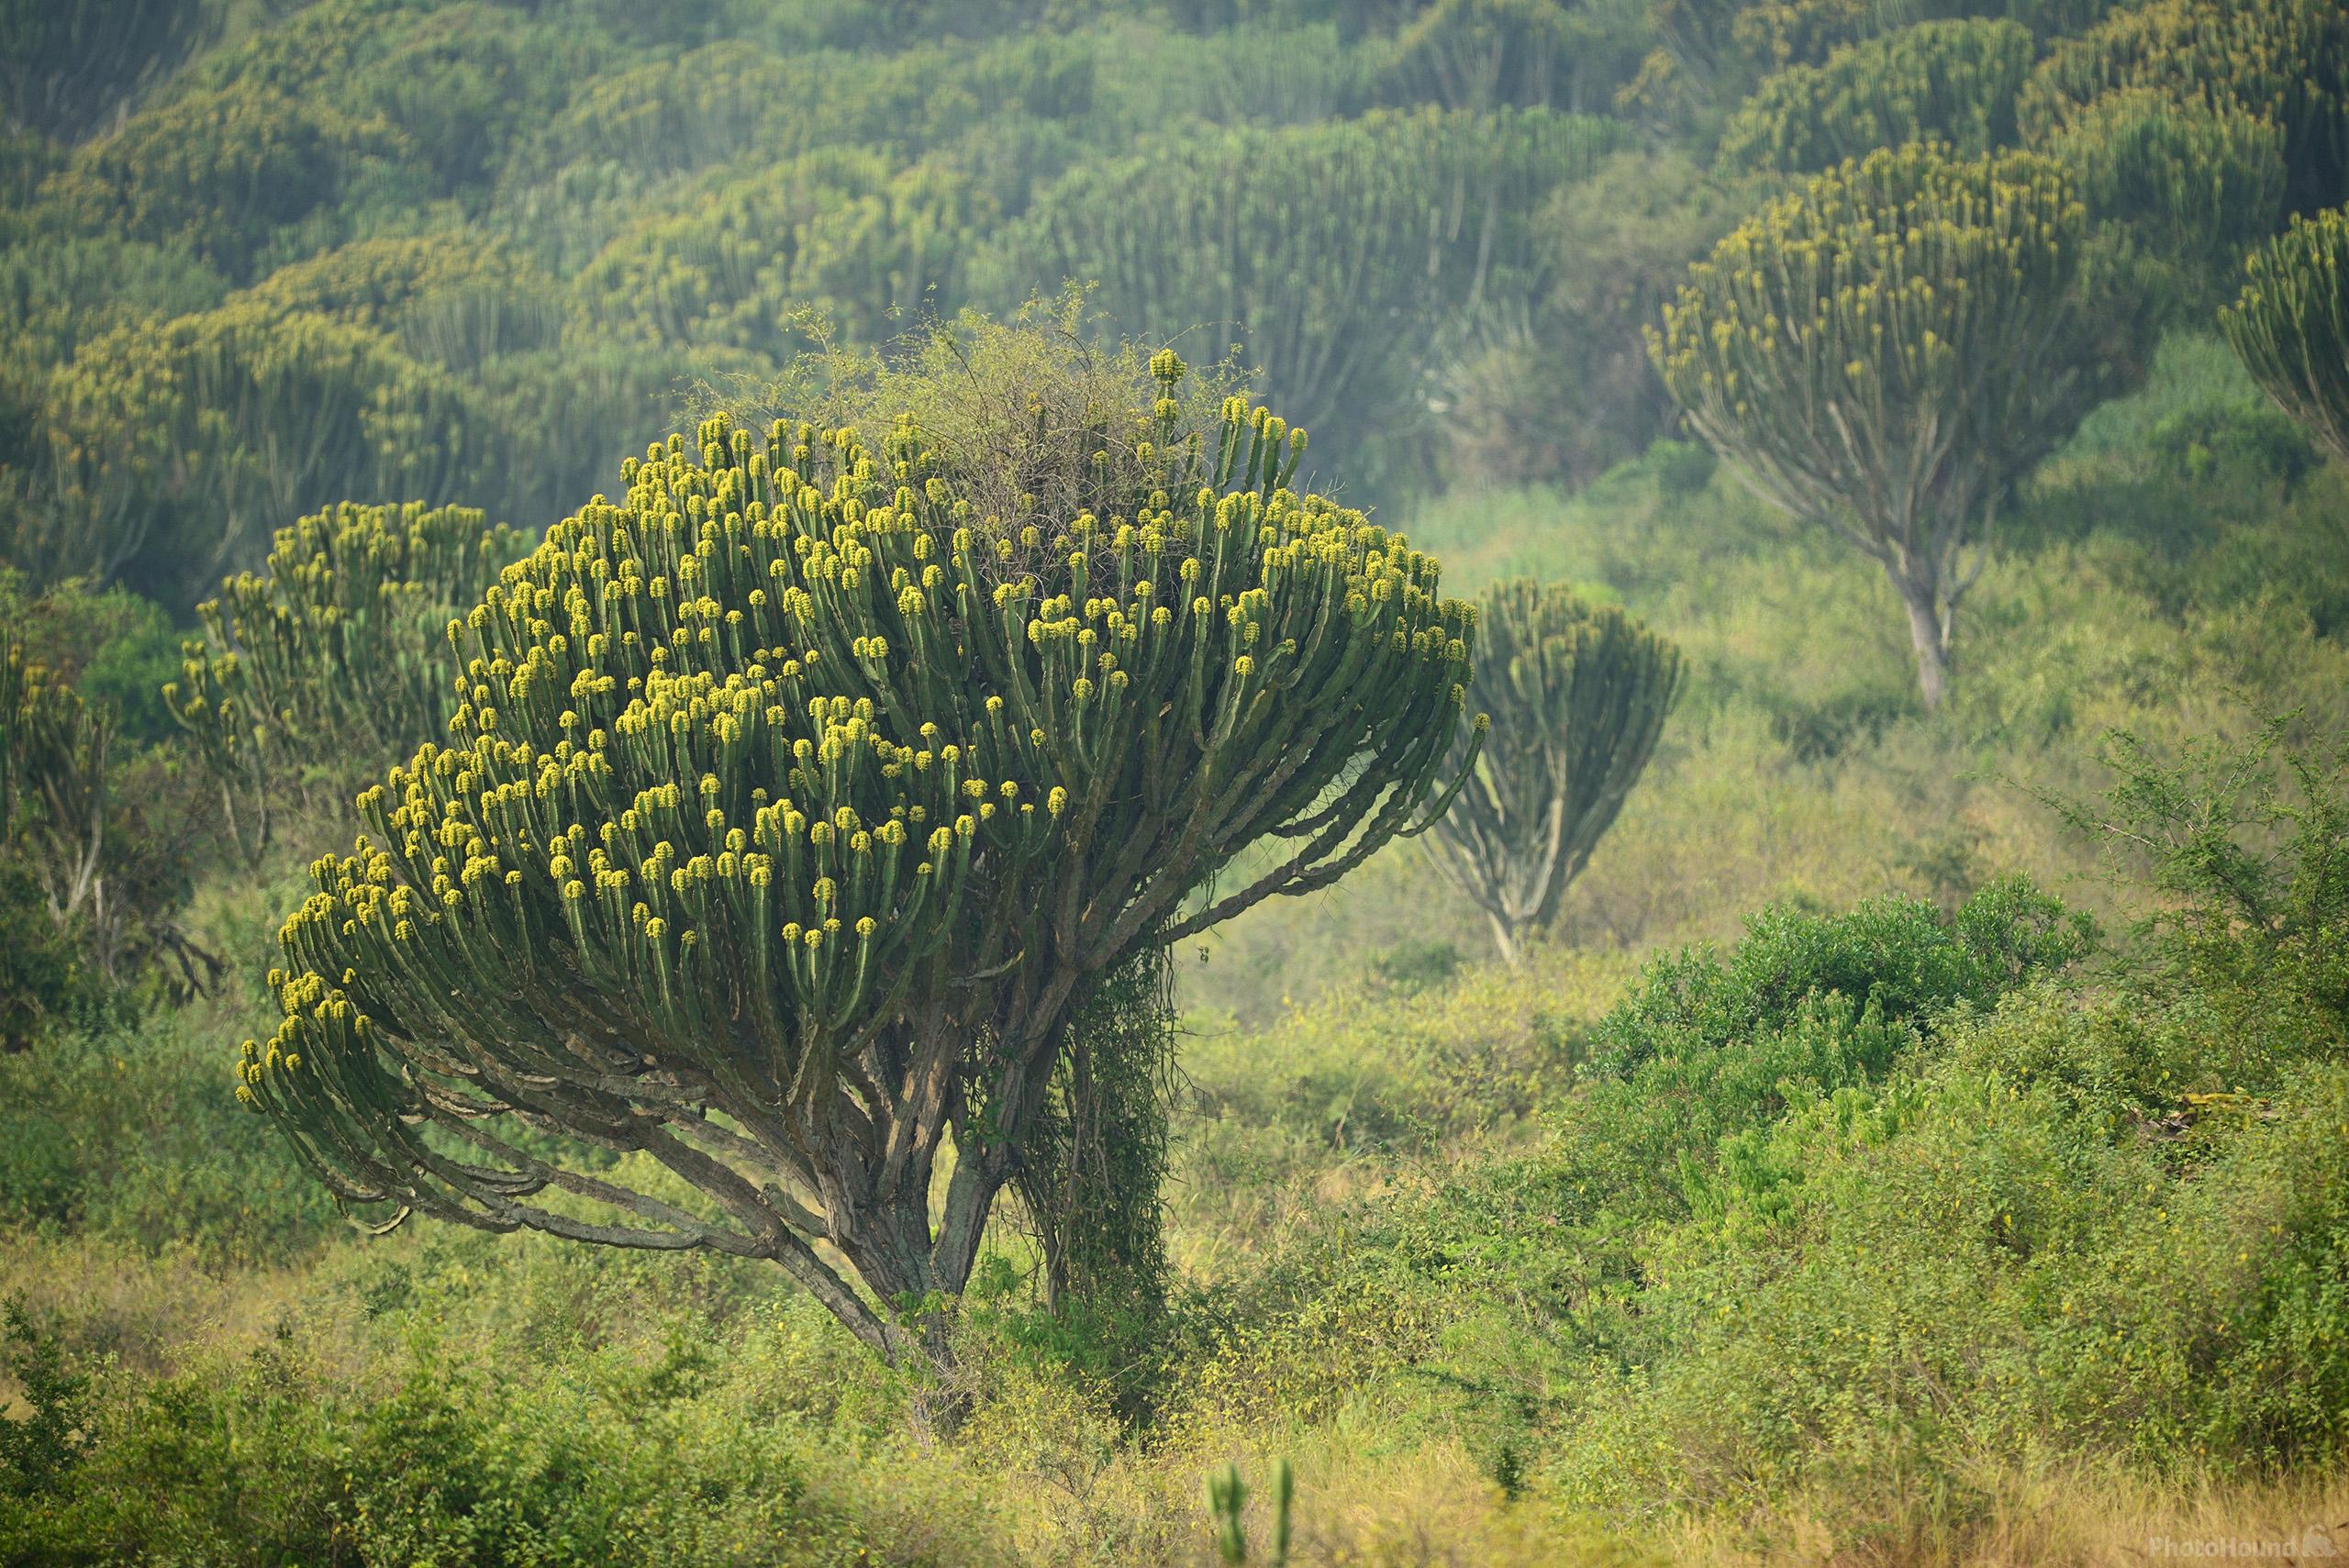 Image of Queen Elizabeth NP - Kasenyi Plains by Luka Esenko